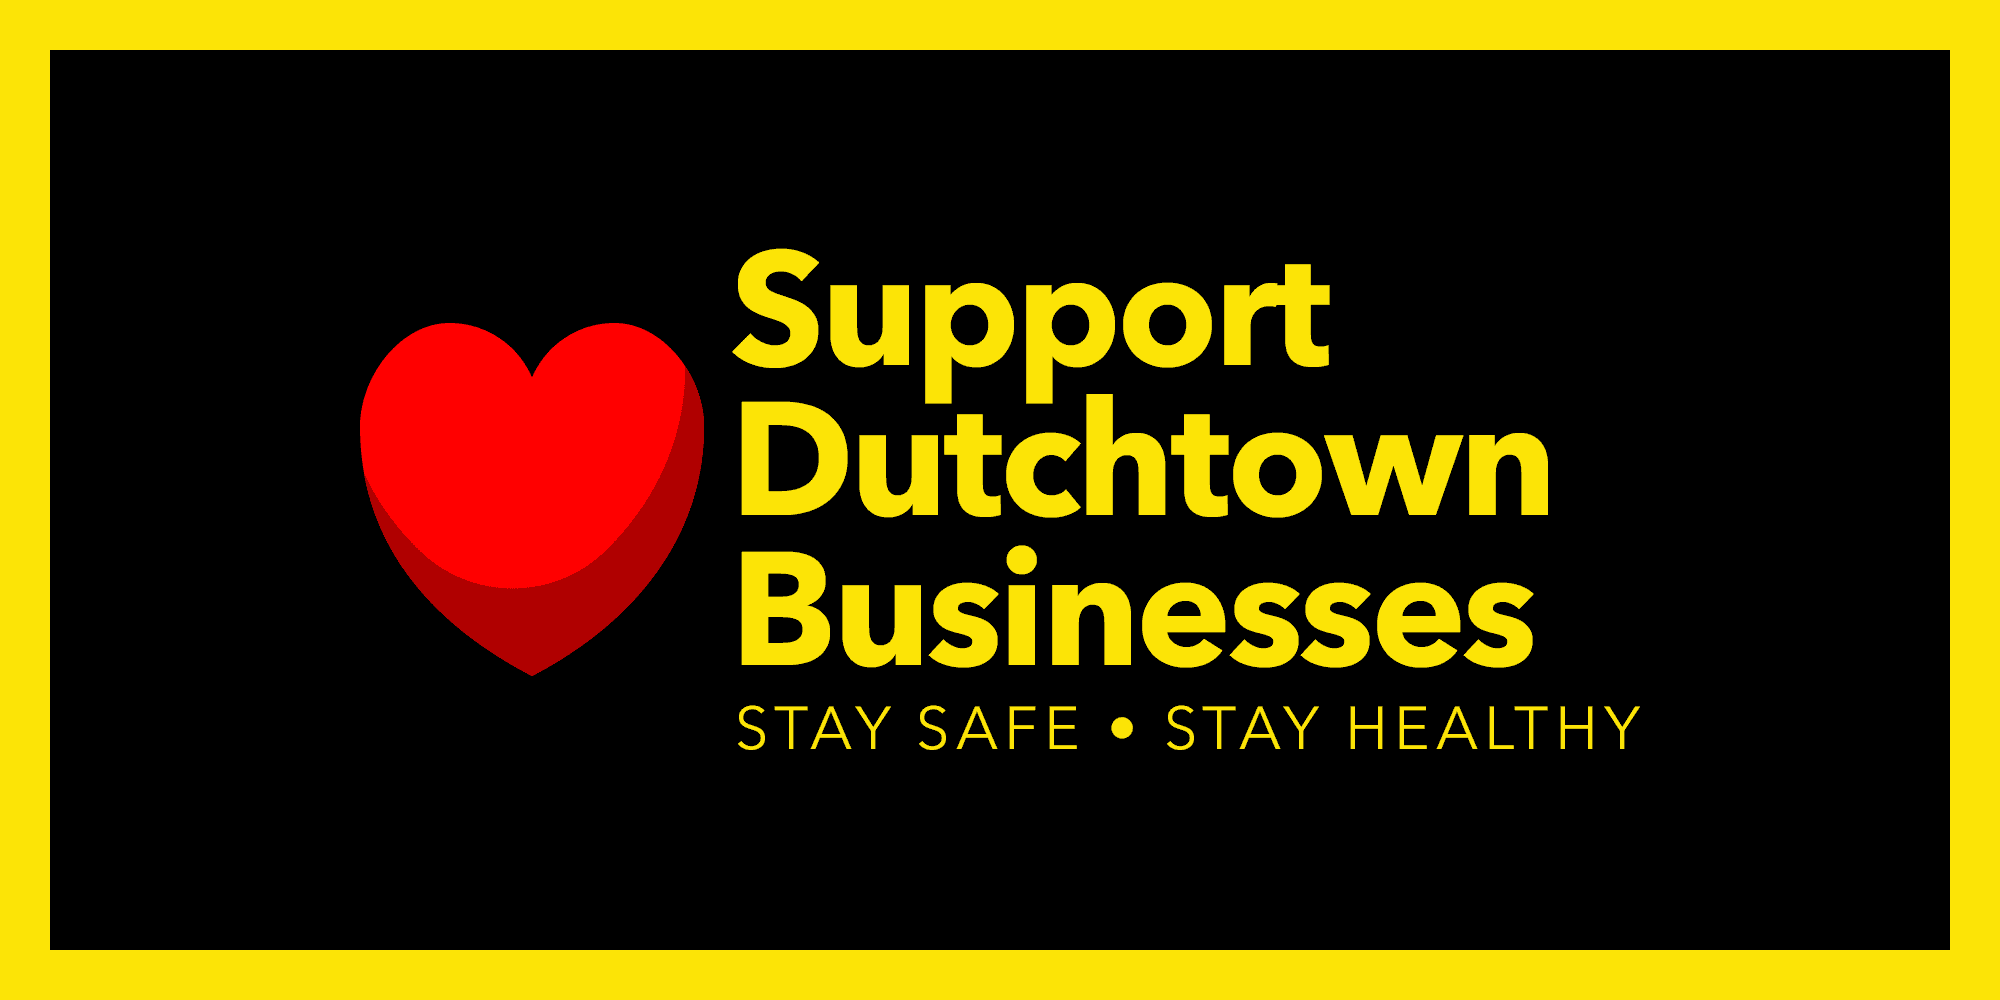 Podržite Dutchtown preduzeća. Budite sigurni, budite zdravi.